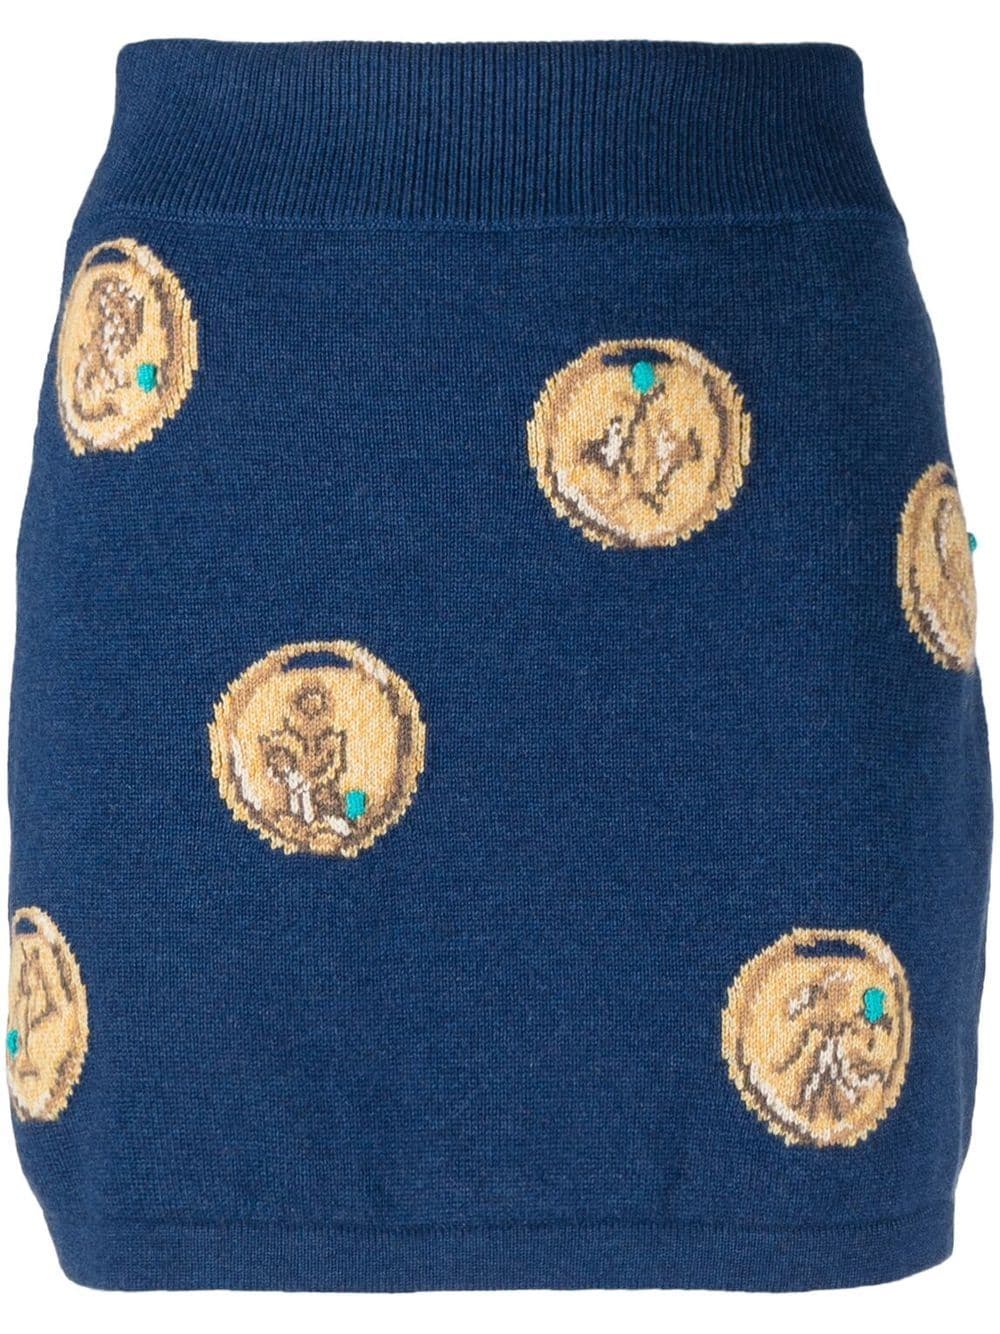 Barrie zodiac signs knit skirt - Blue von Barrie